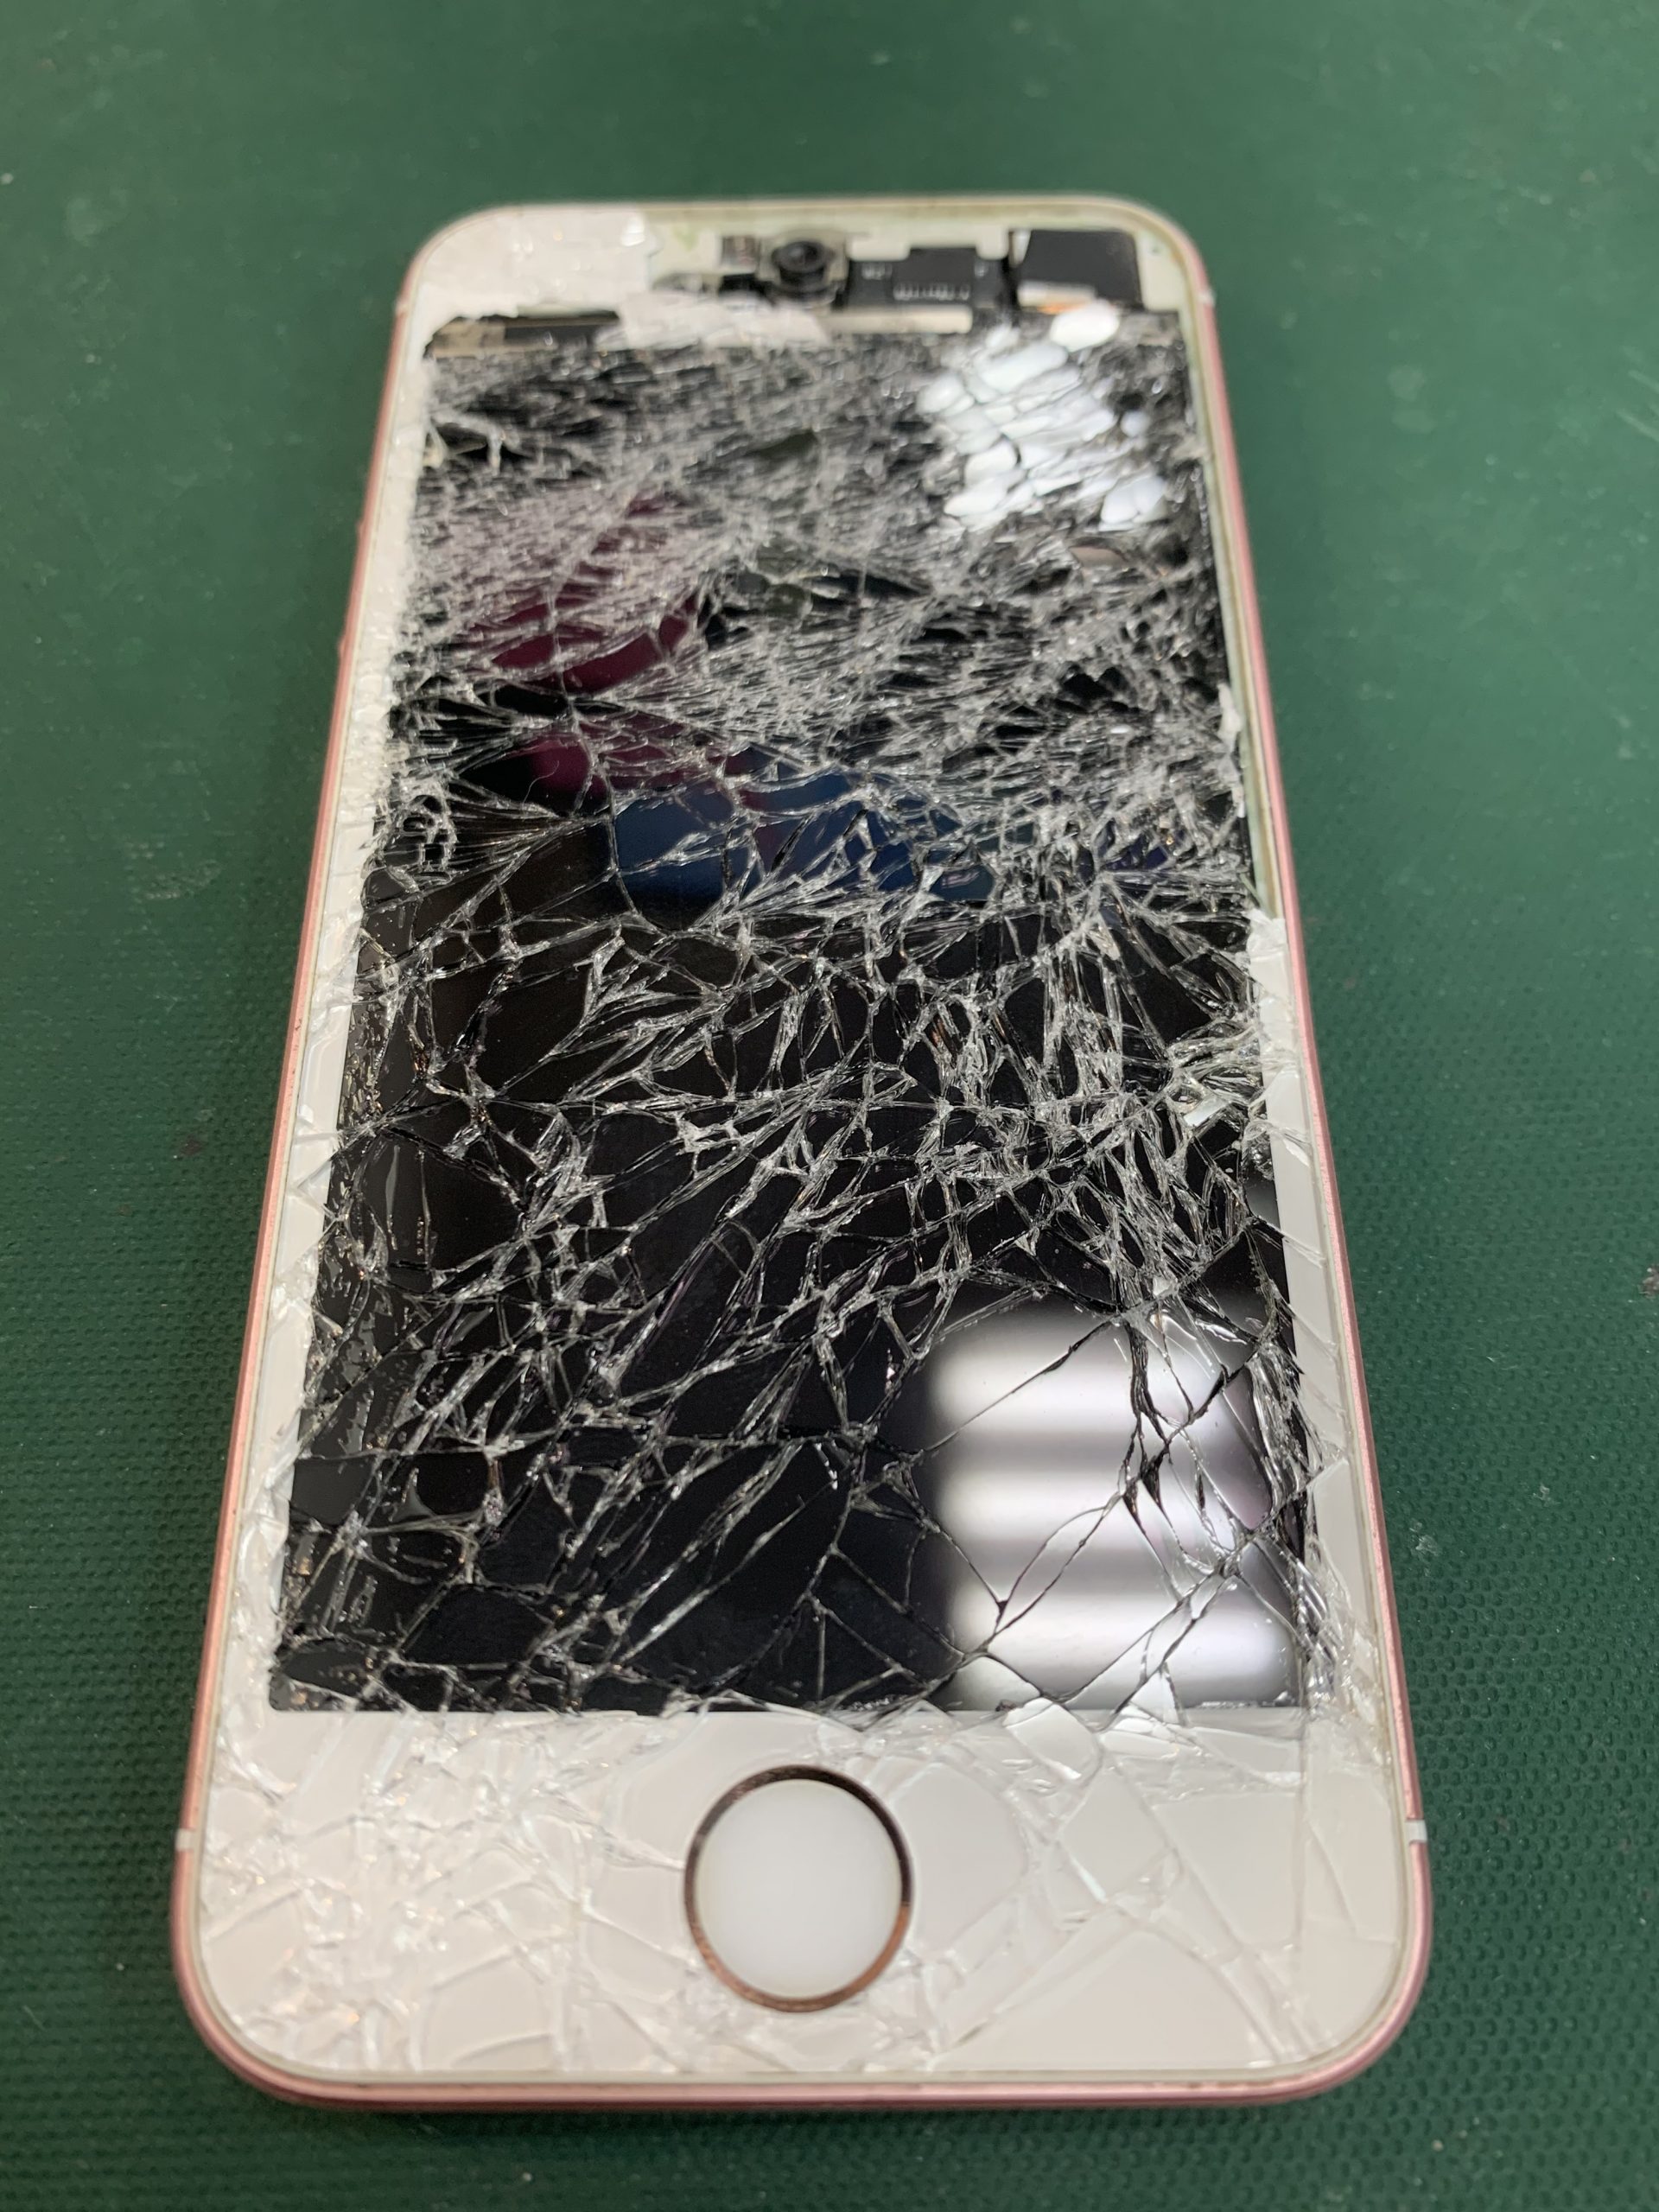 iPhoneのガラス割れ、すぐに修理した方が良い理由。